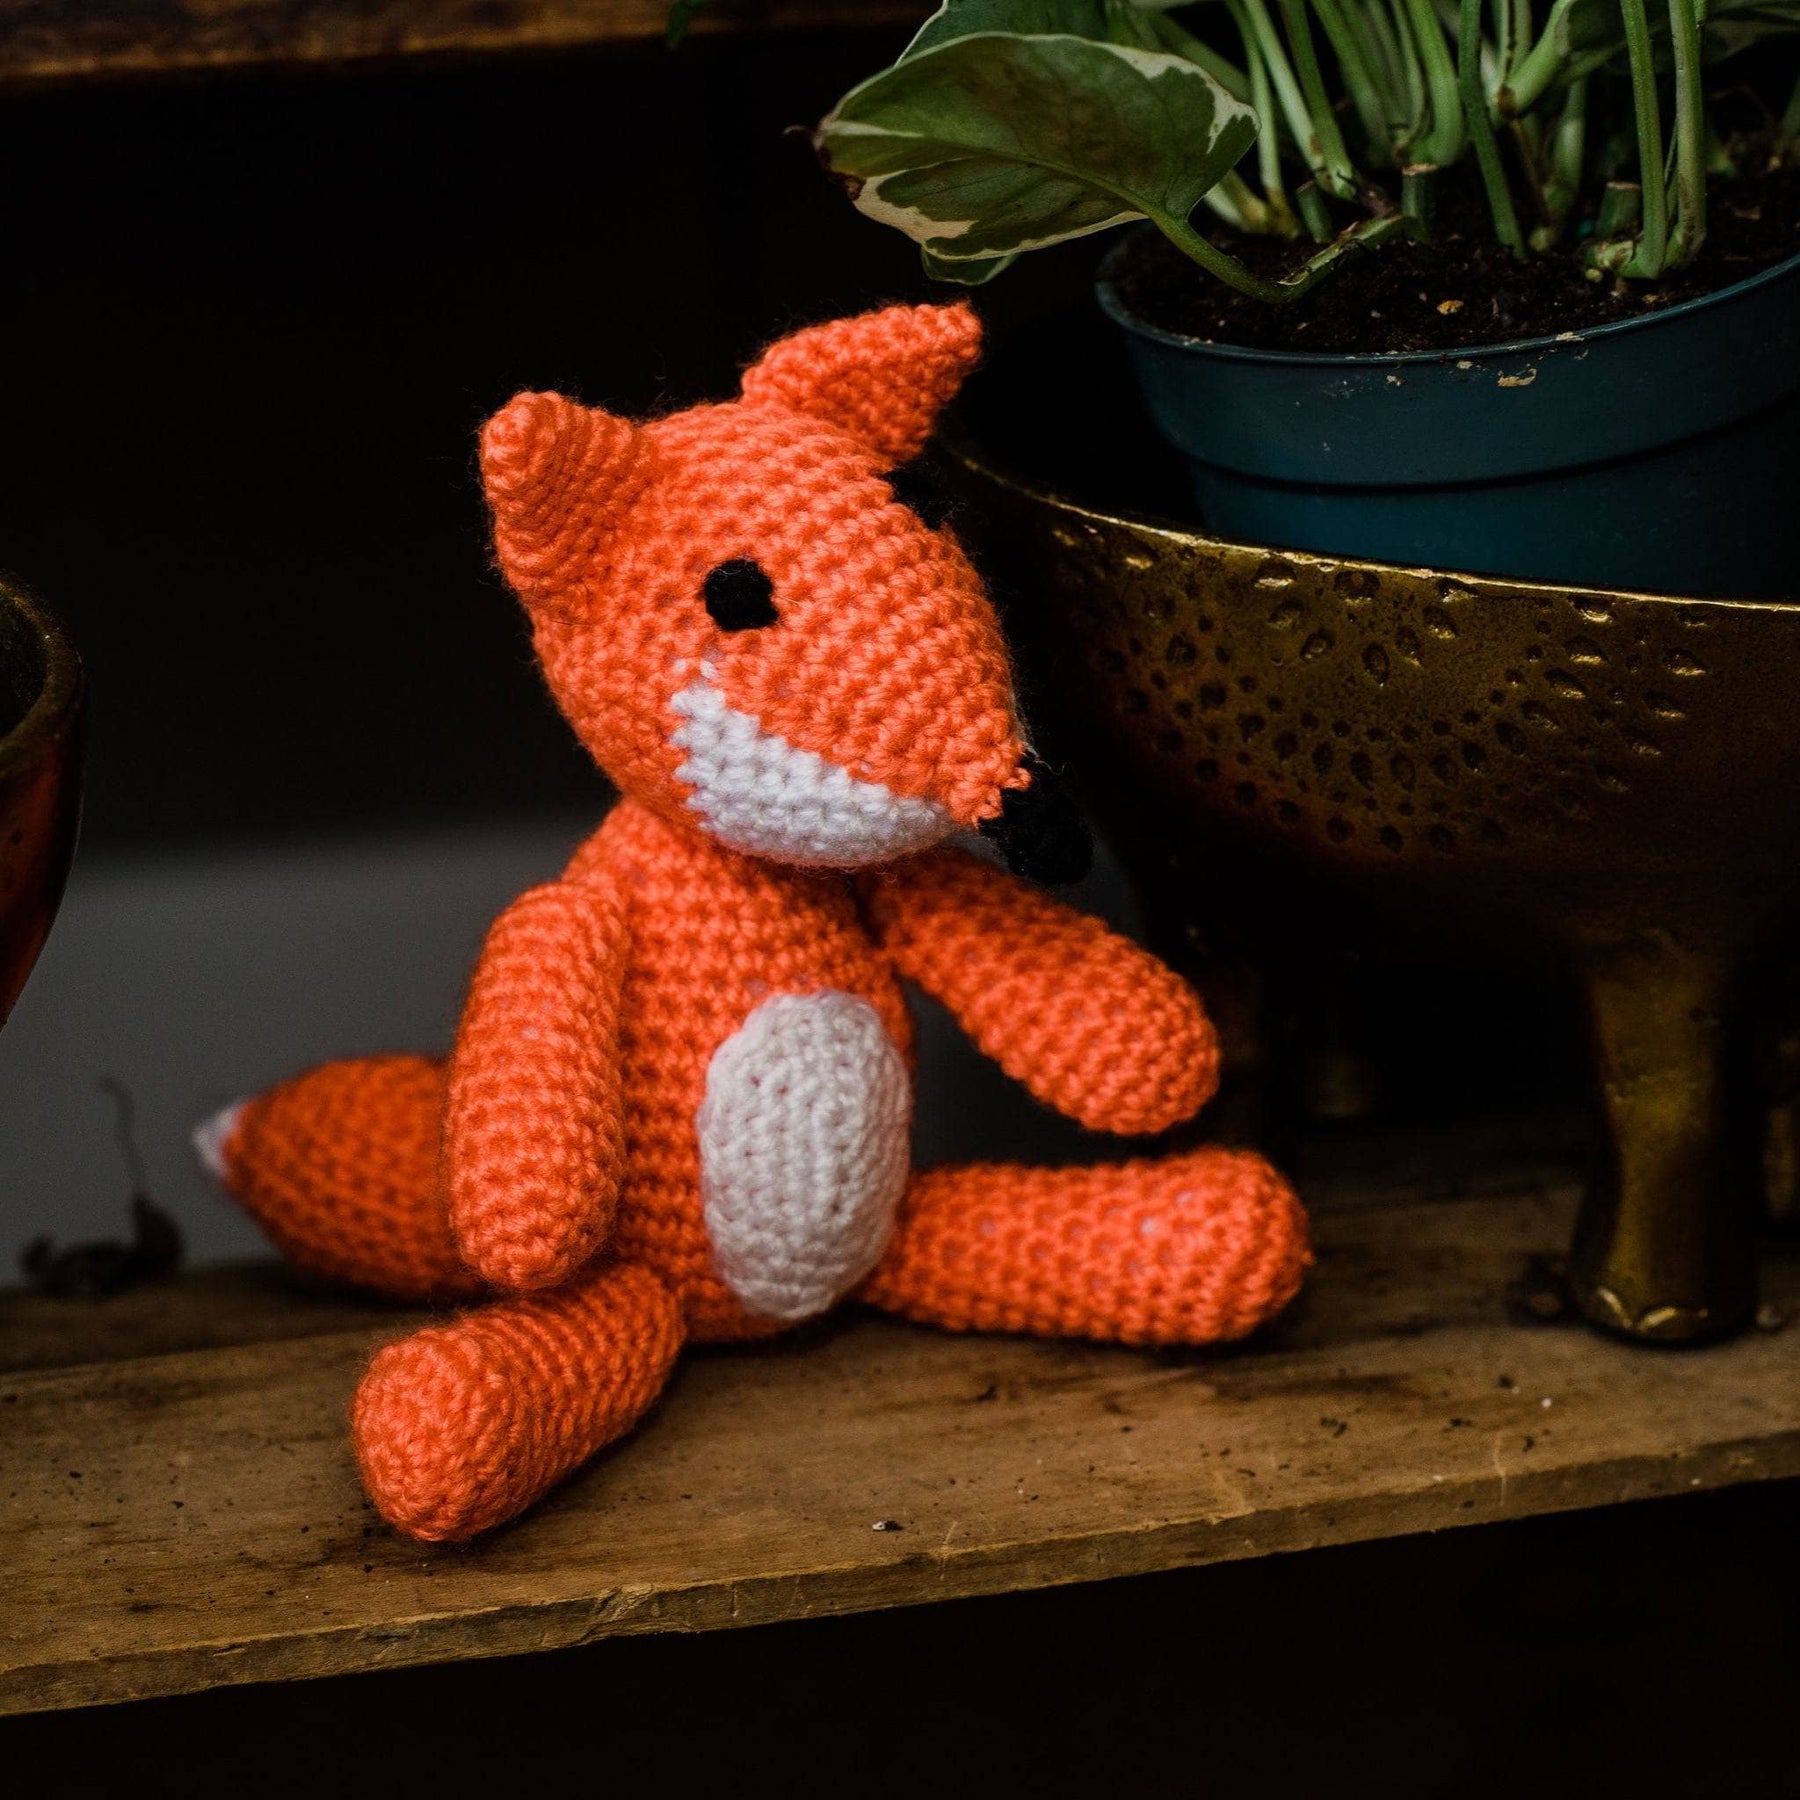 10 Essential Crochet Tools - Weekend Crochet • Green Fox Farms Designs